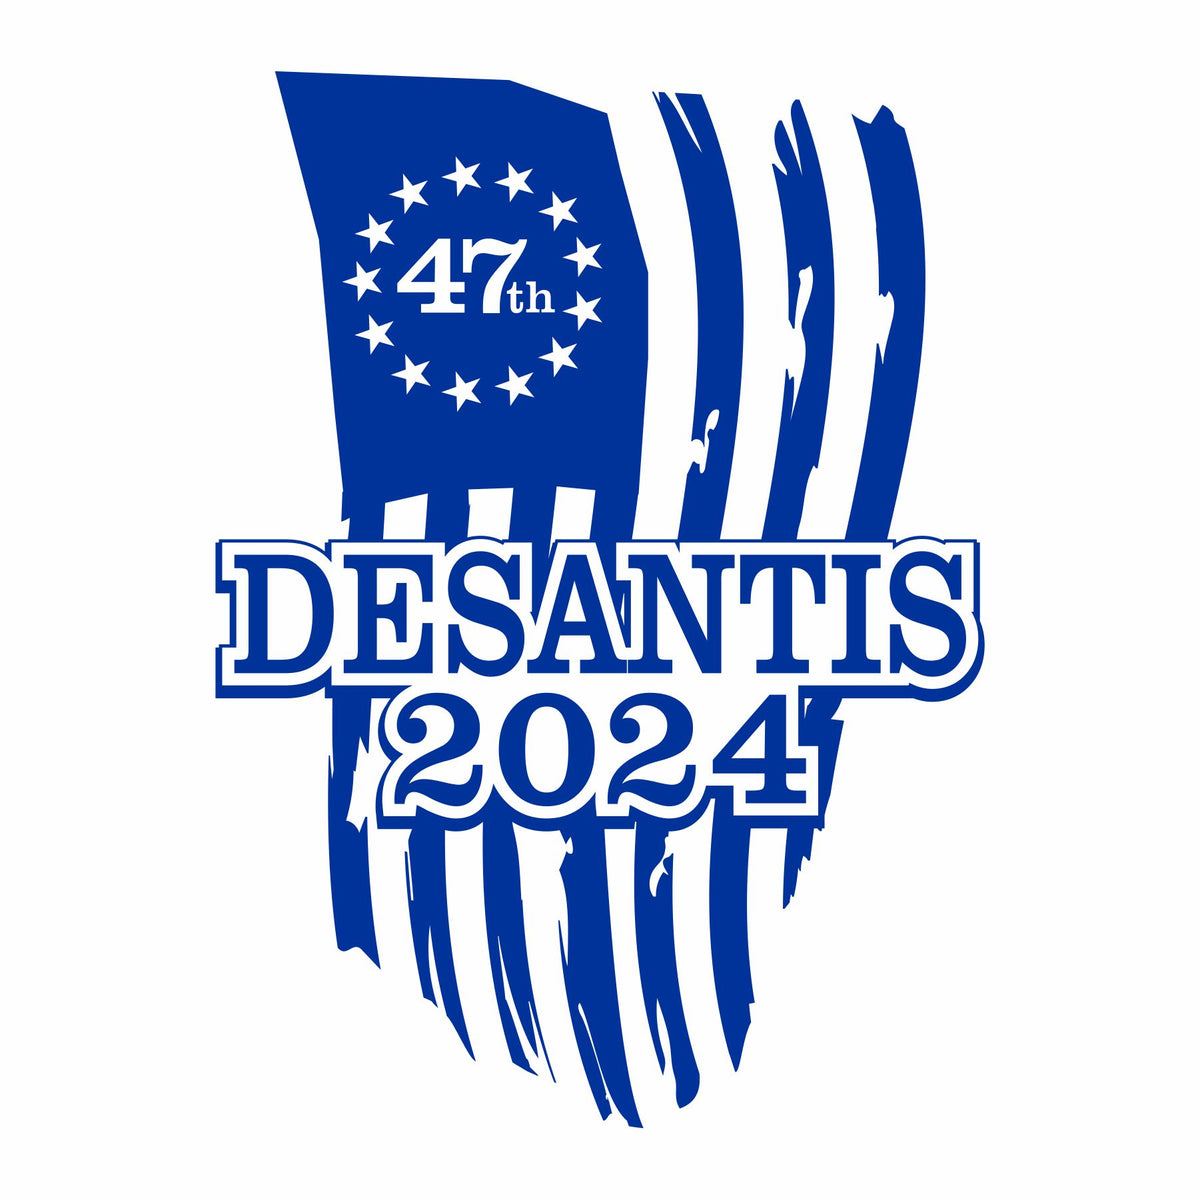 DeSantis 2024 Tattered Flag - 47th - Vinyl Decal - Free Shipping